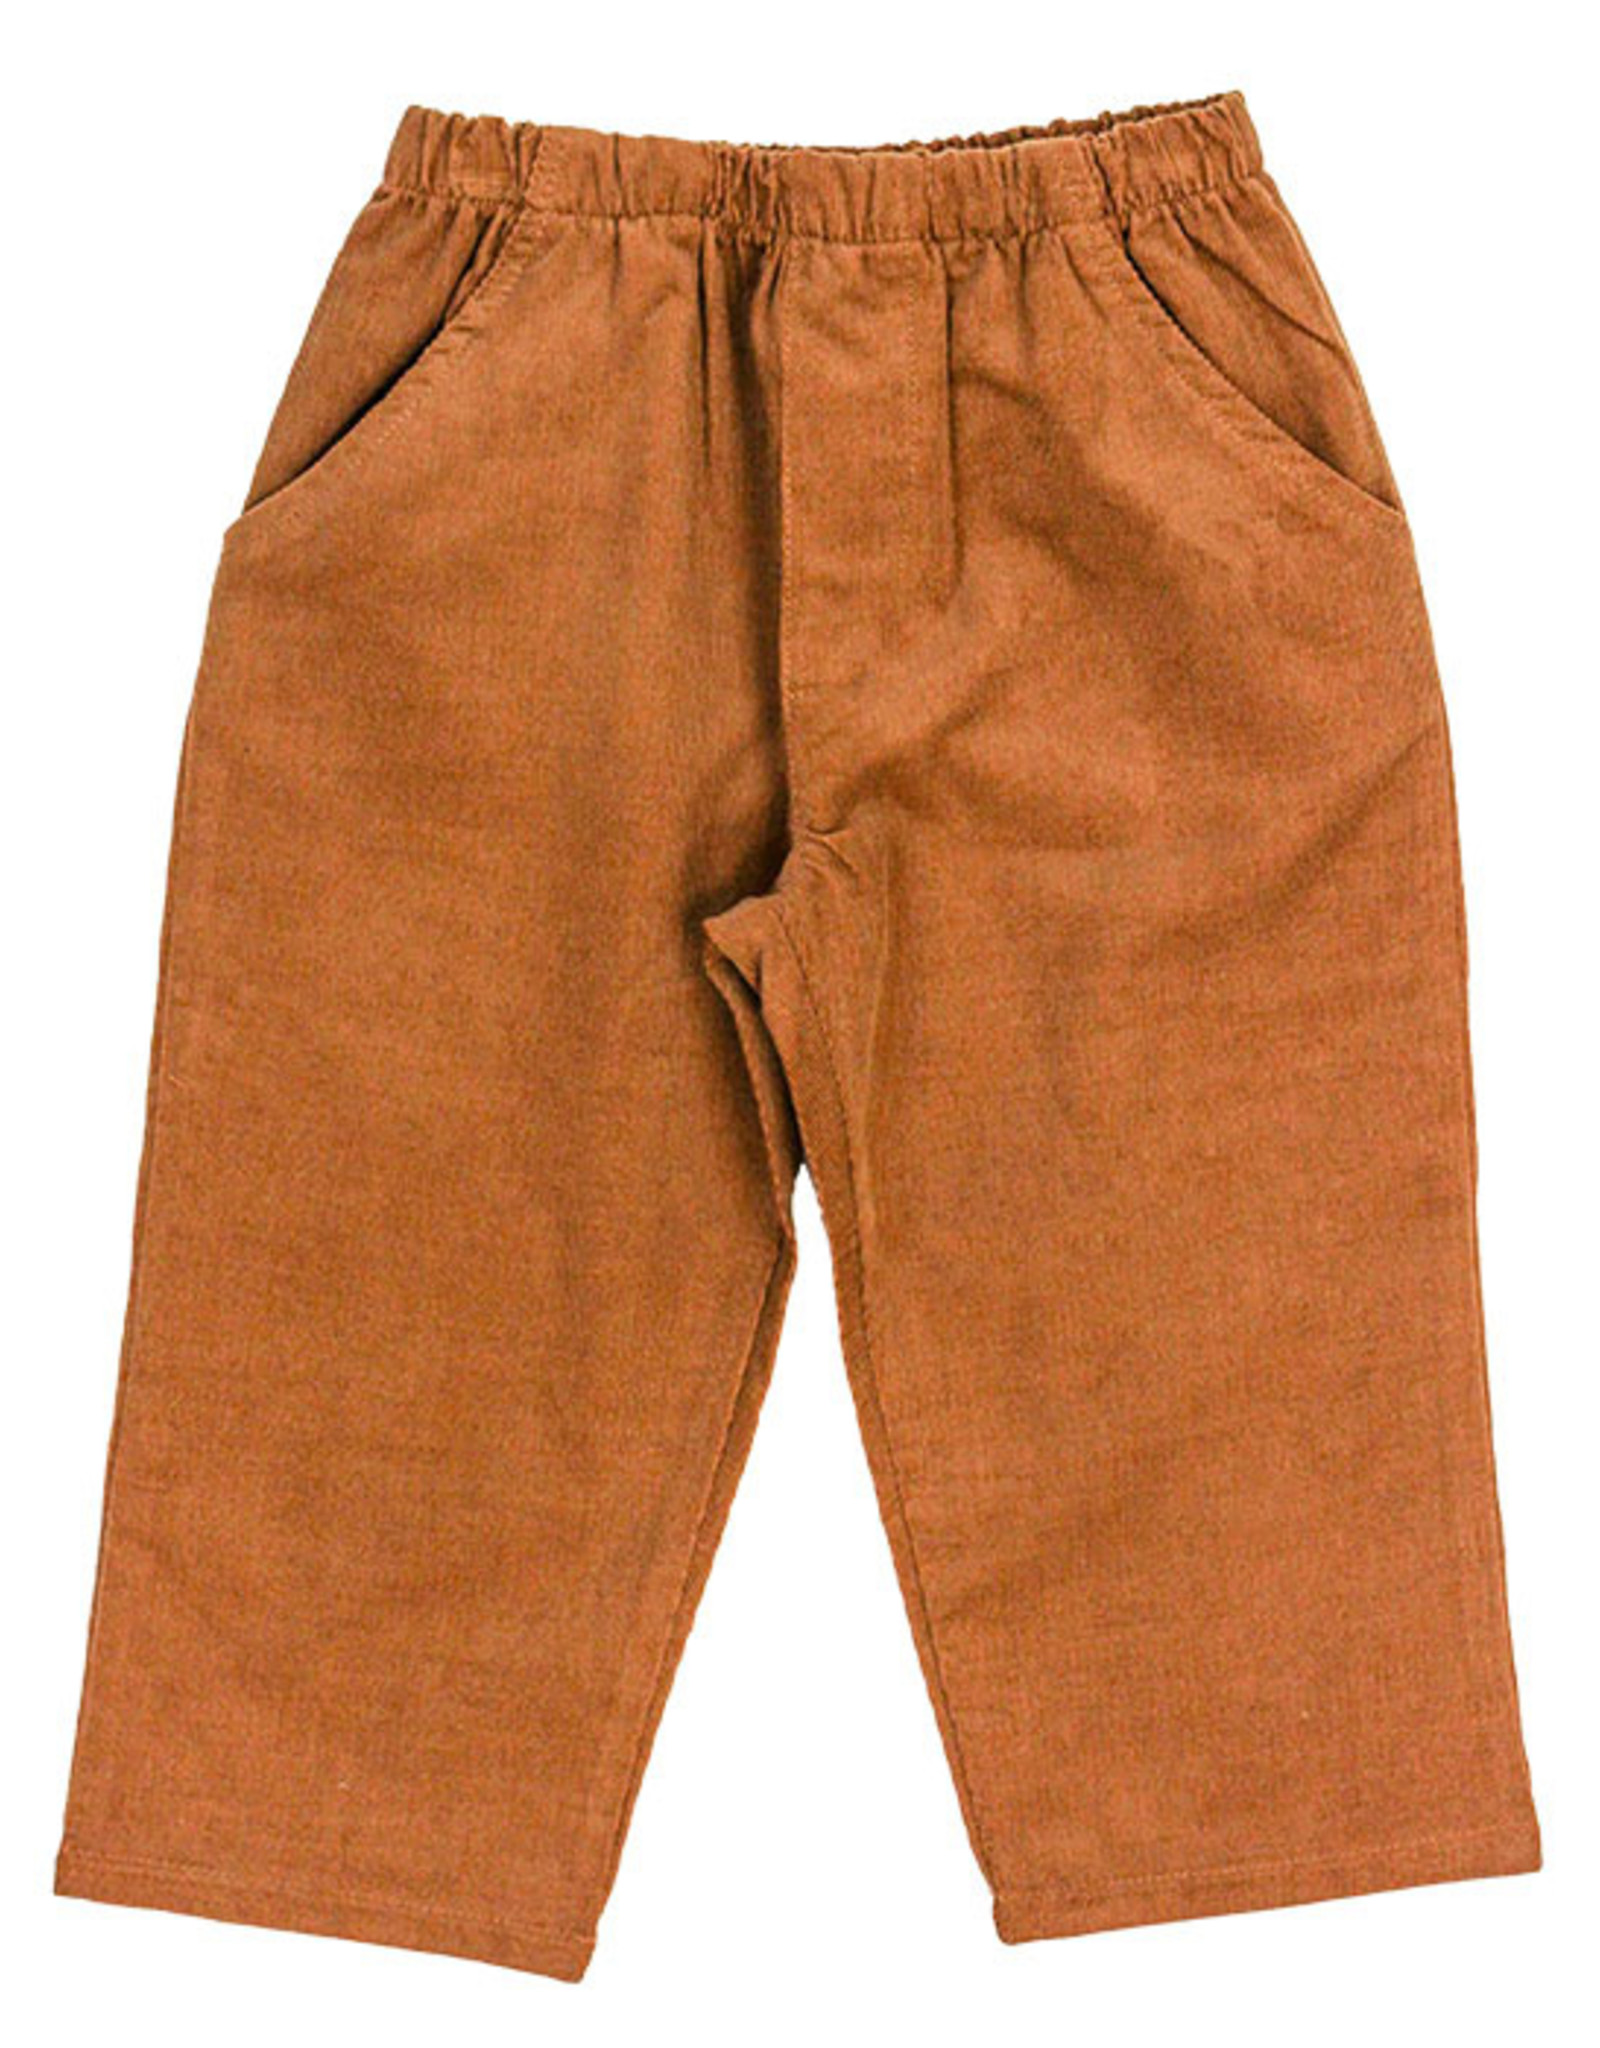 The Bailey Boys Chocolate Brown Cord Elastic Pants